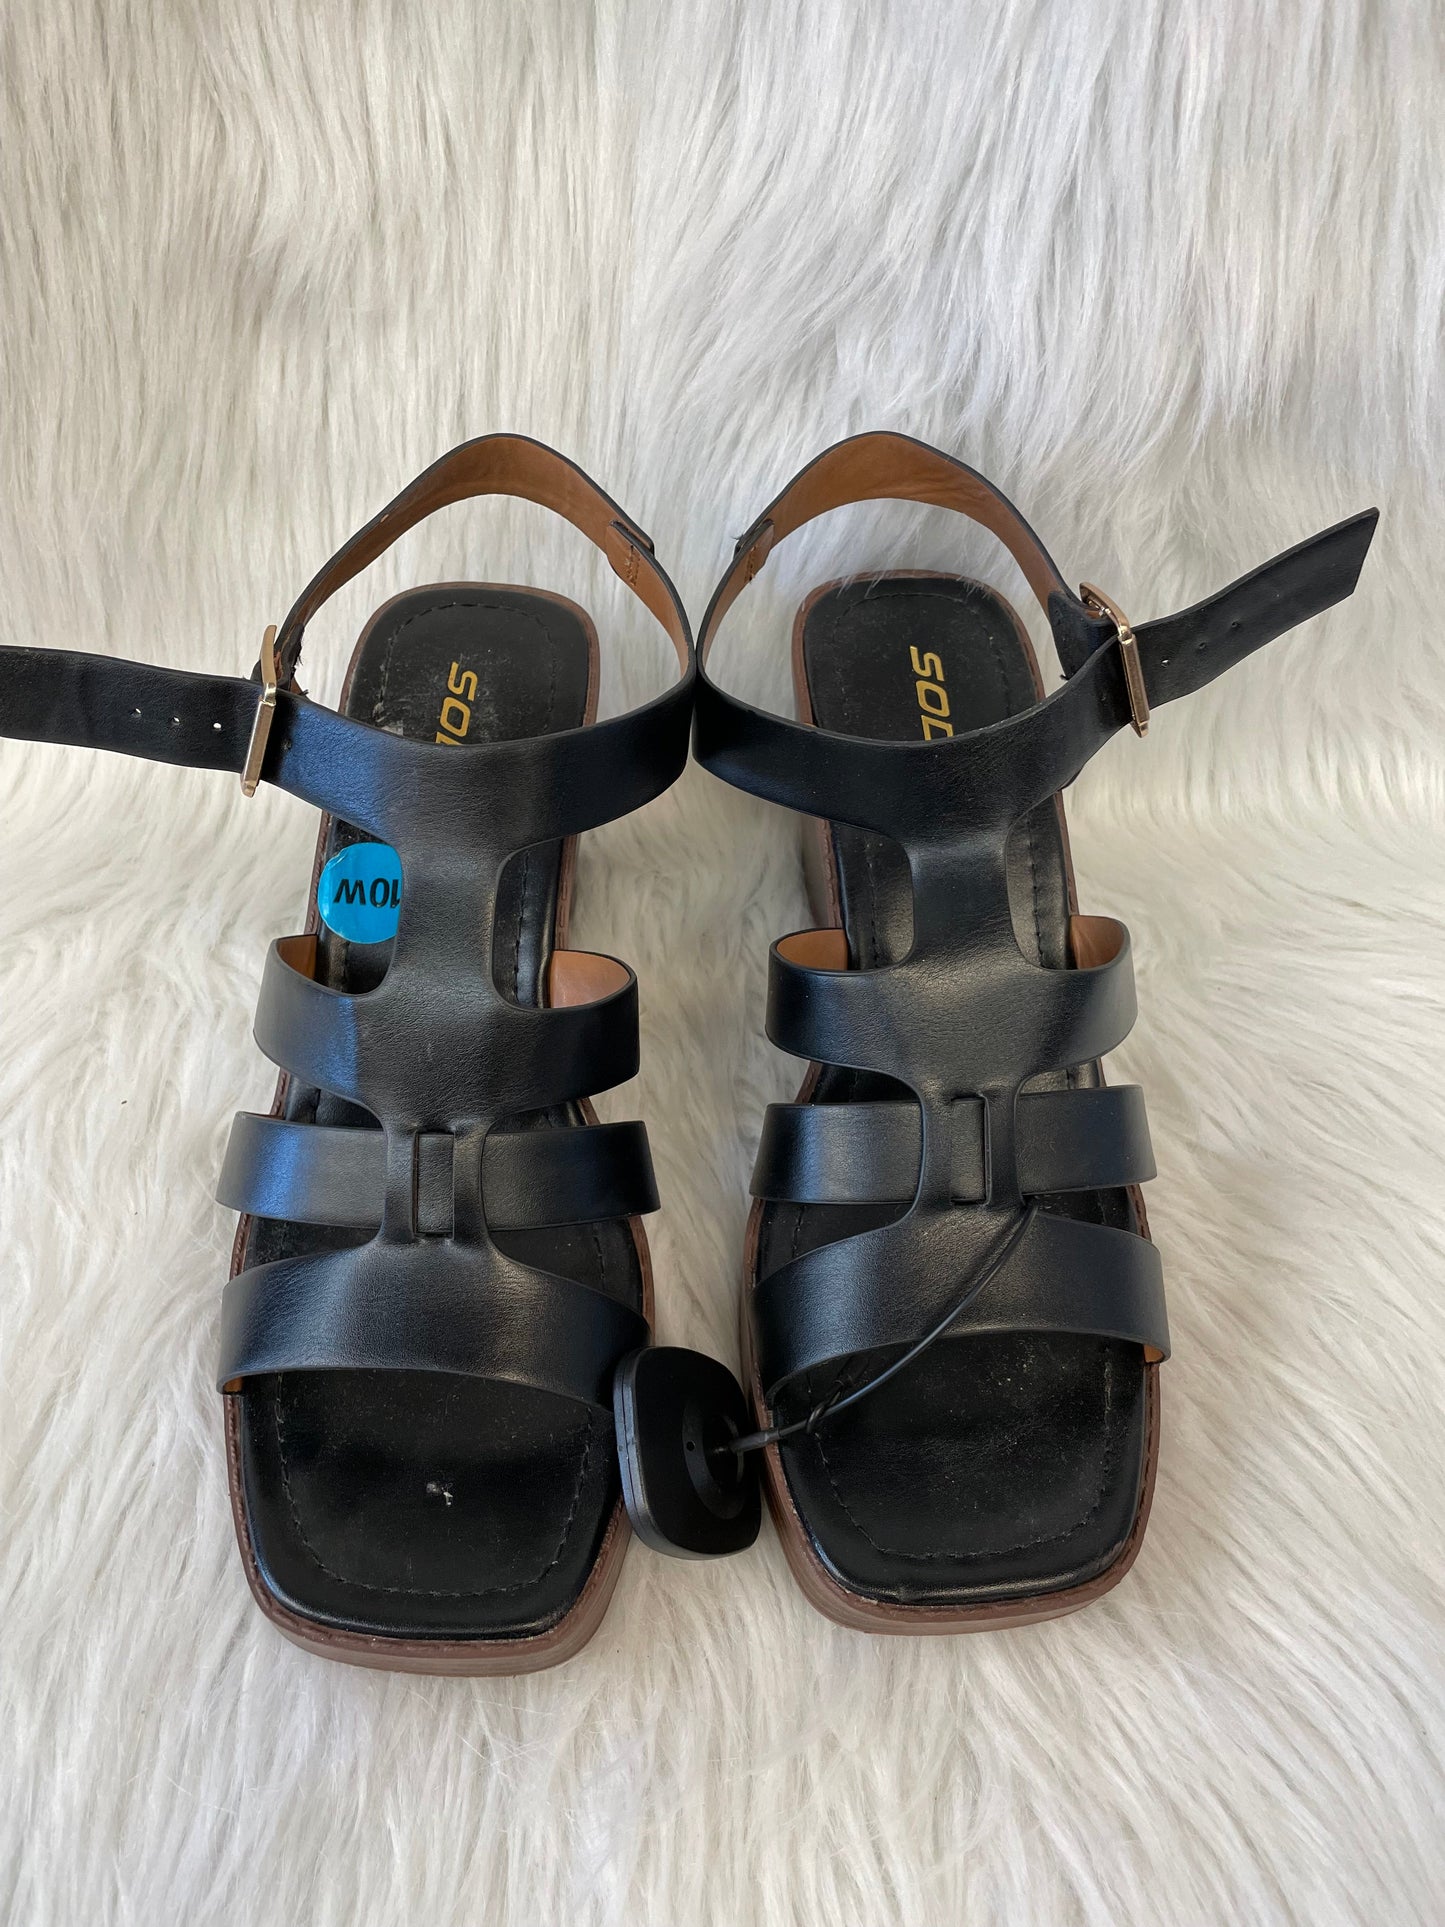 Black Sandals Heels Wedge Soda, Size 10